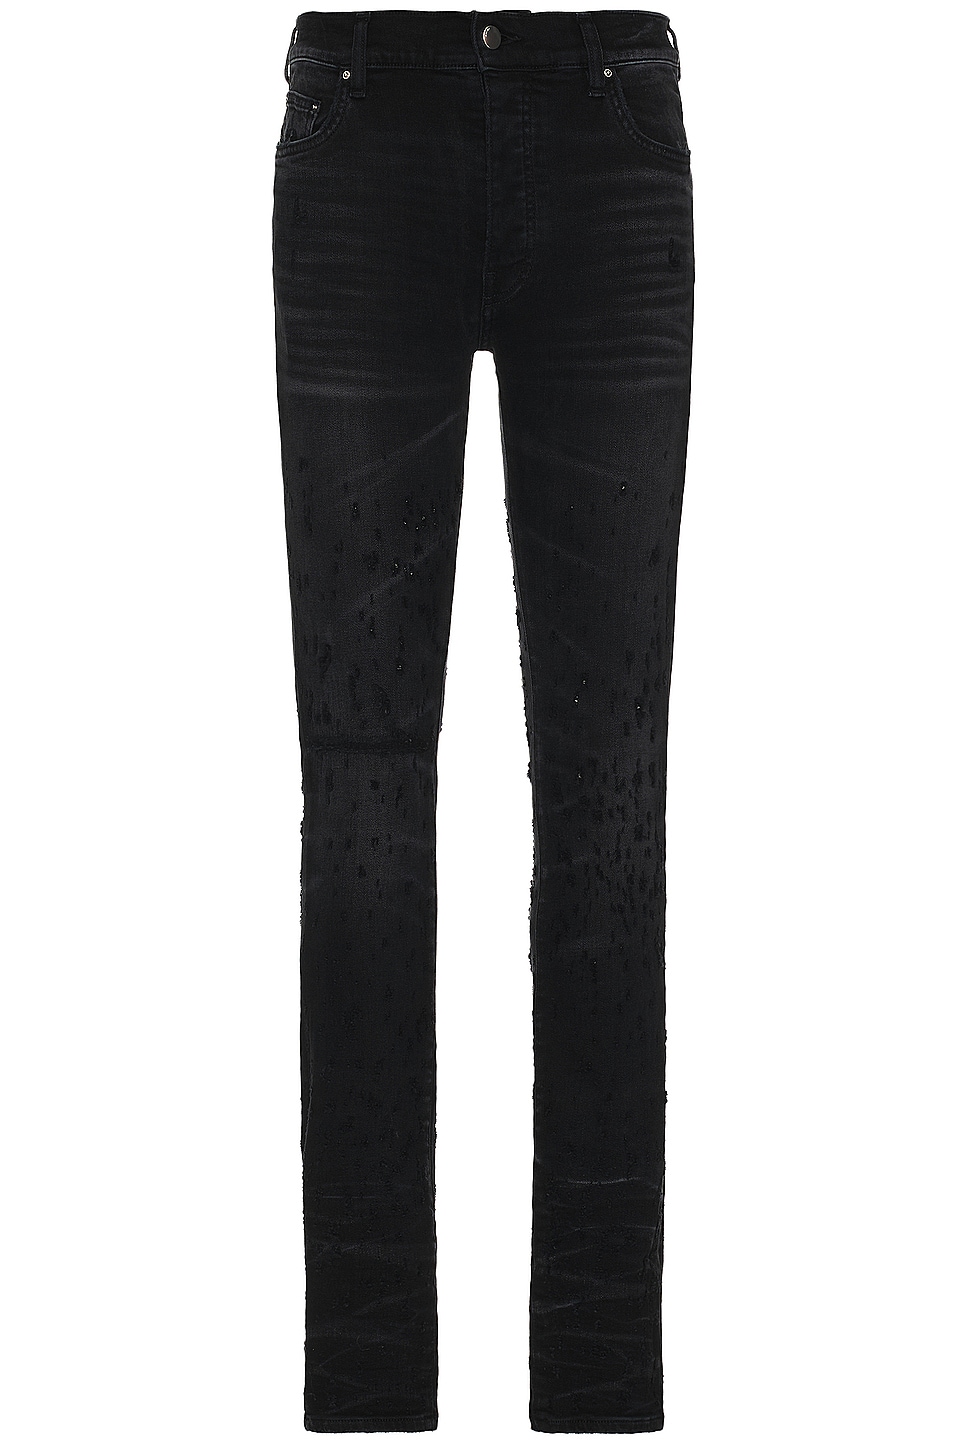 Image 1 of Amiri Shotgun Skinny Jean in Faded Black